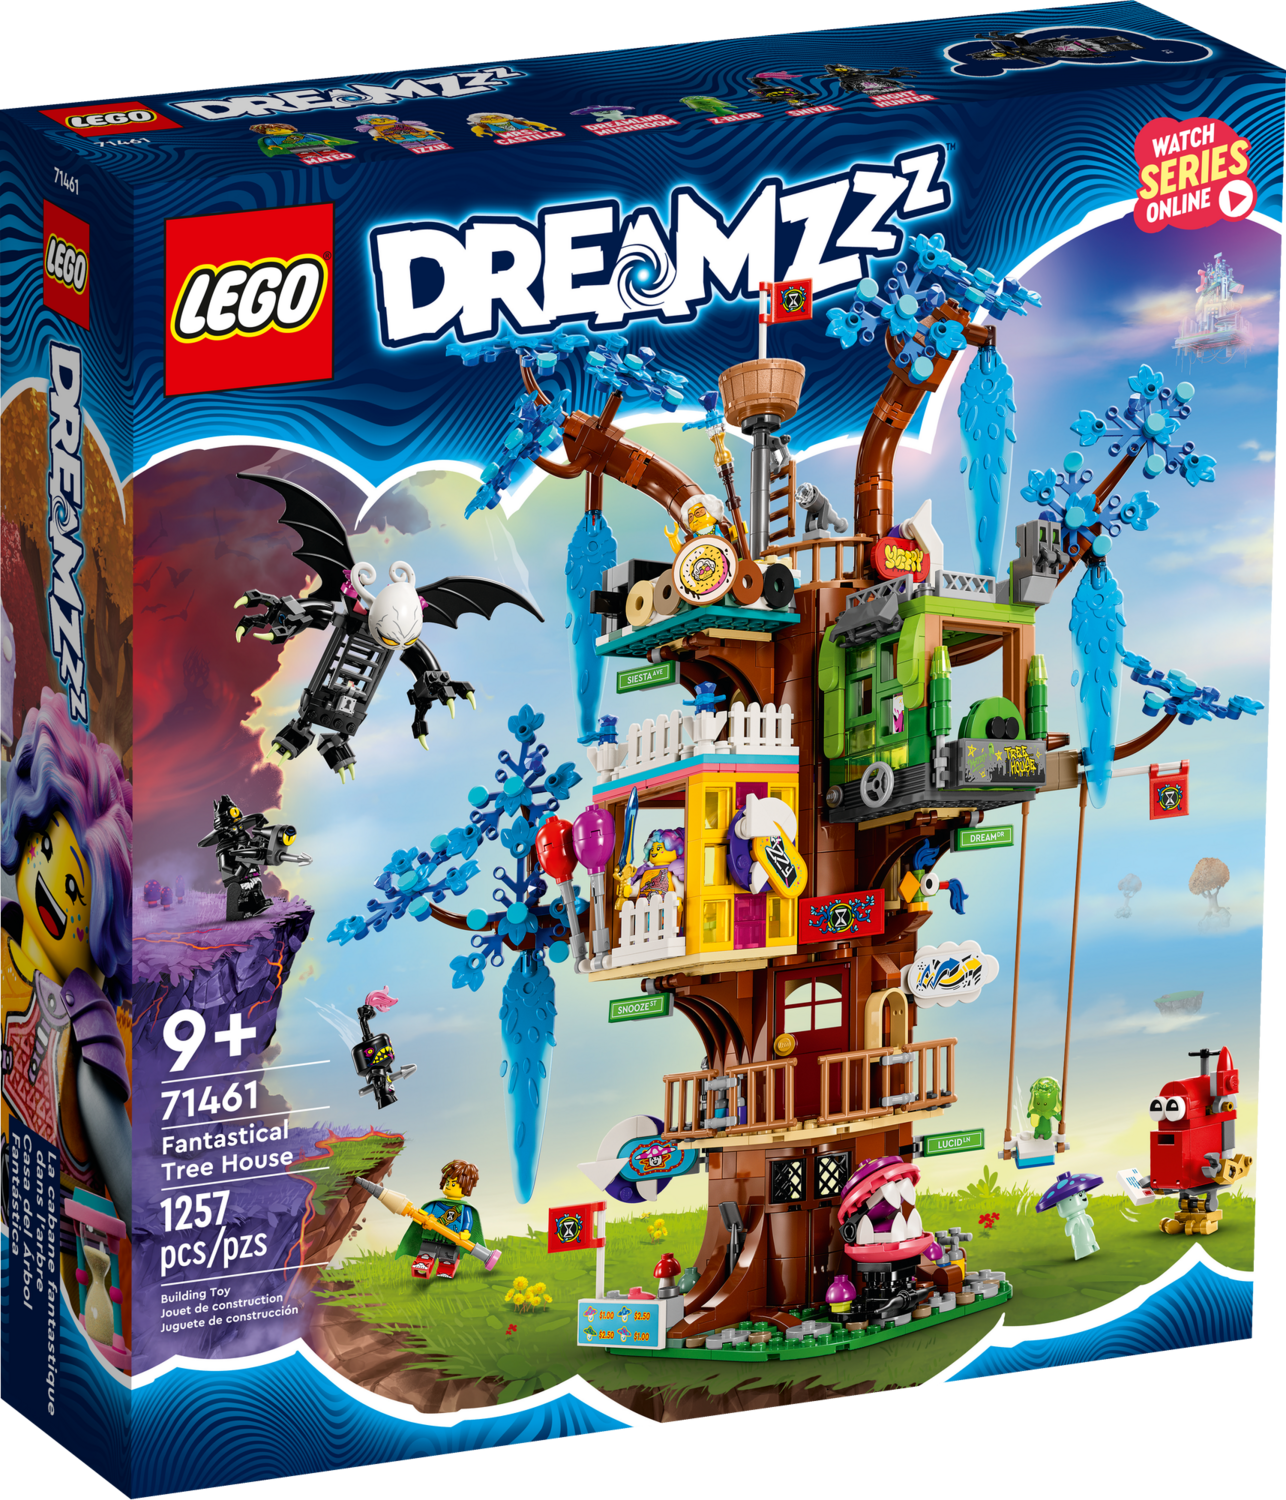 LEGO® DREAMZzz - Fantastical Tree House